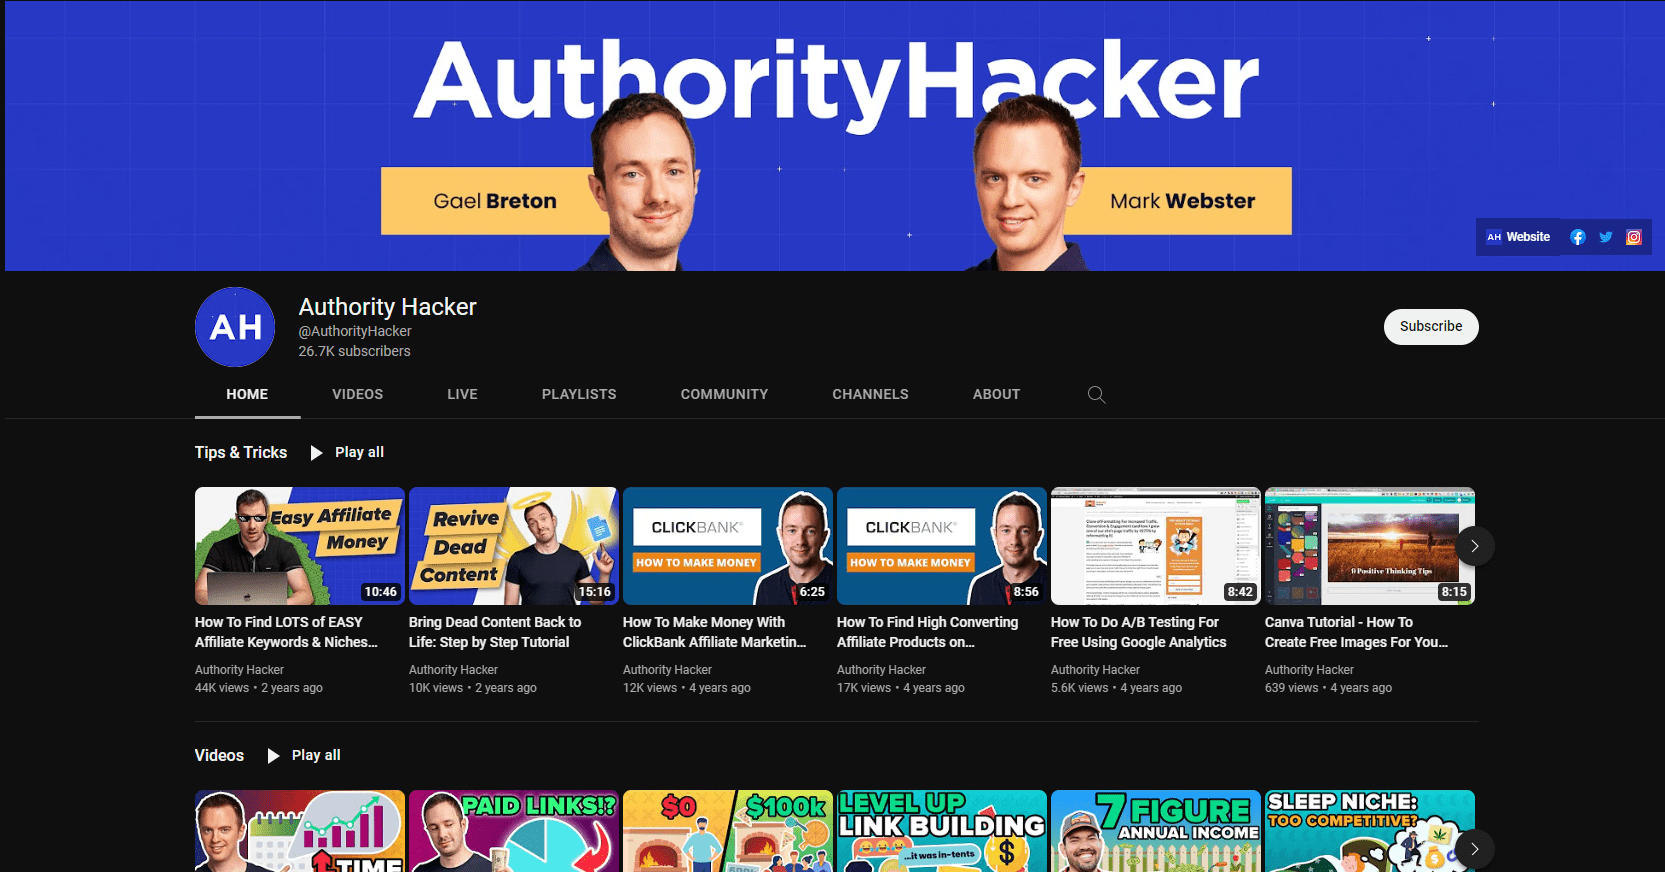 Authority Hacker Video Content